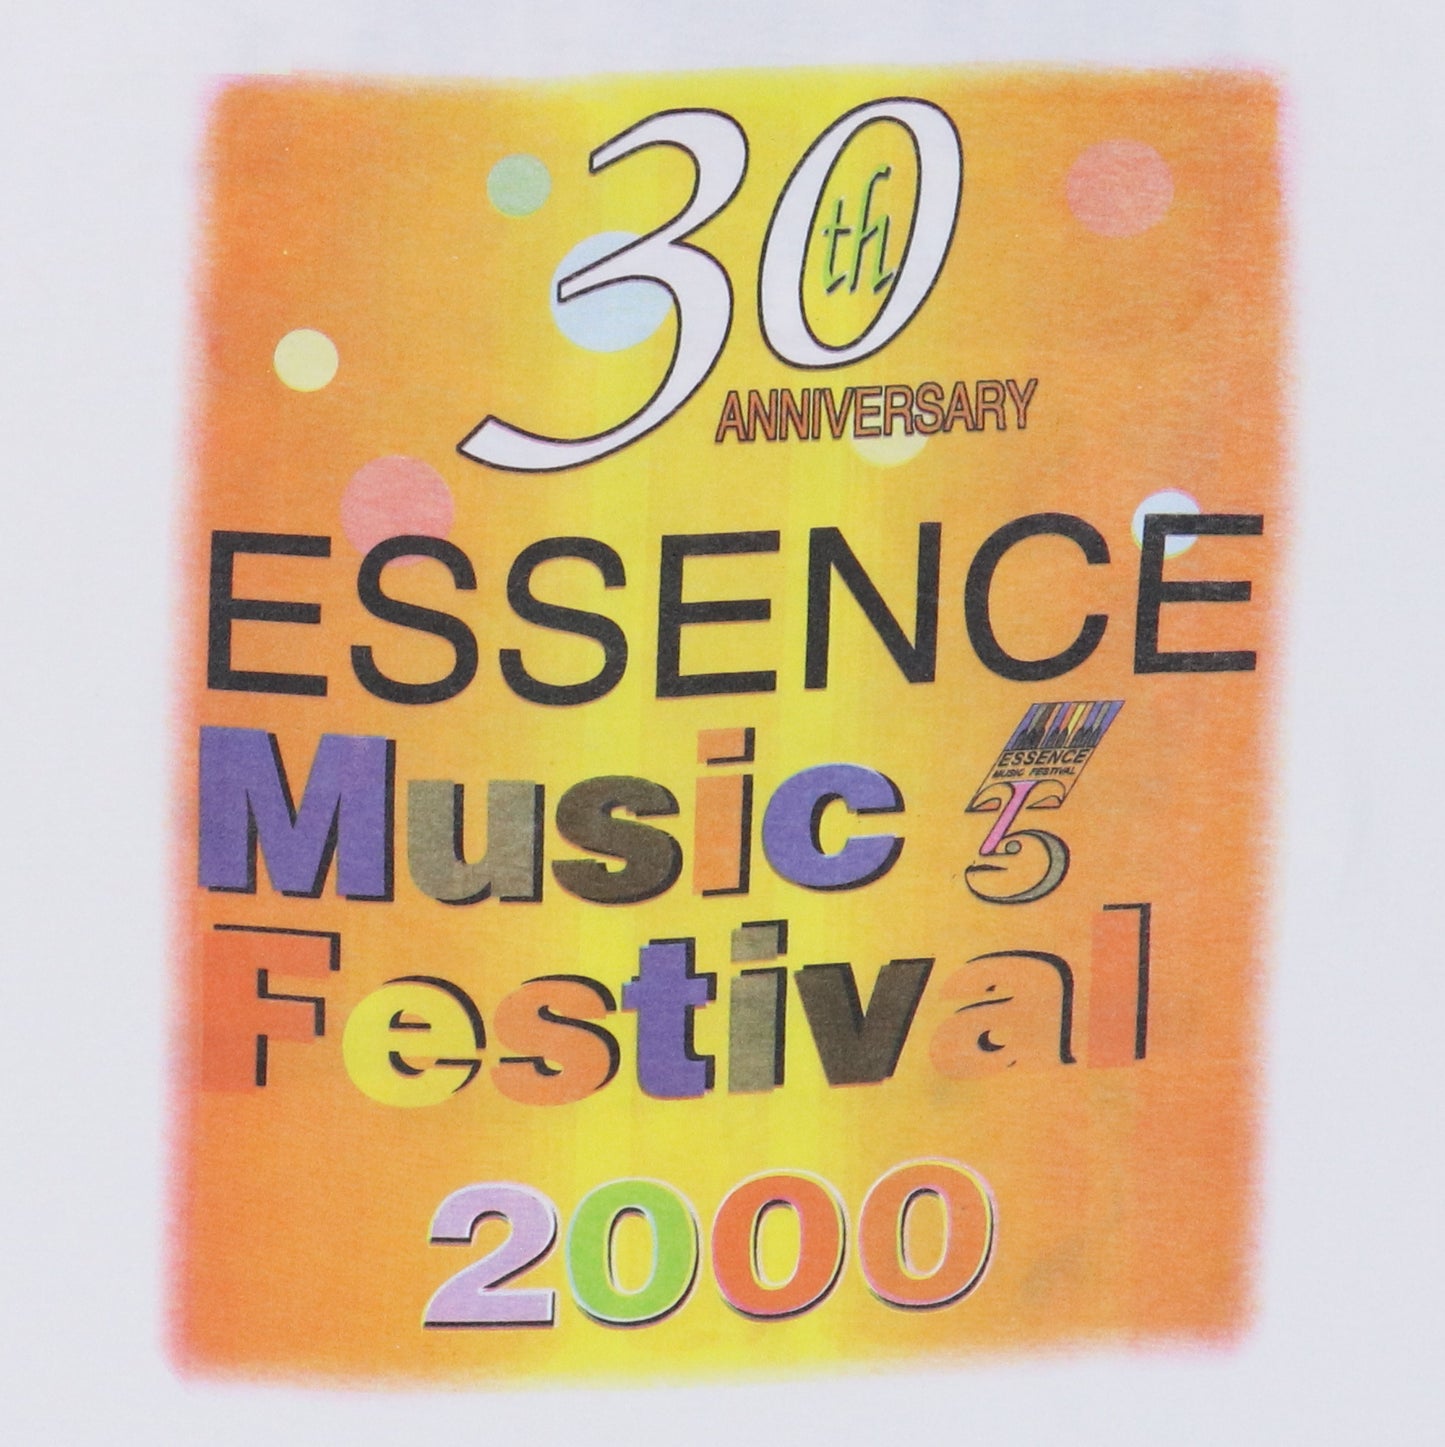 2000 Essence Music Festival Shirt